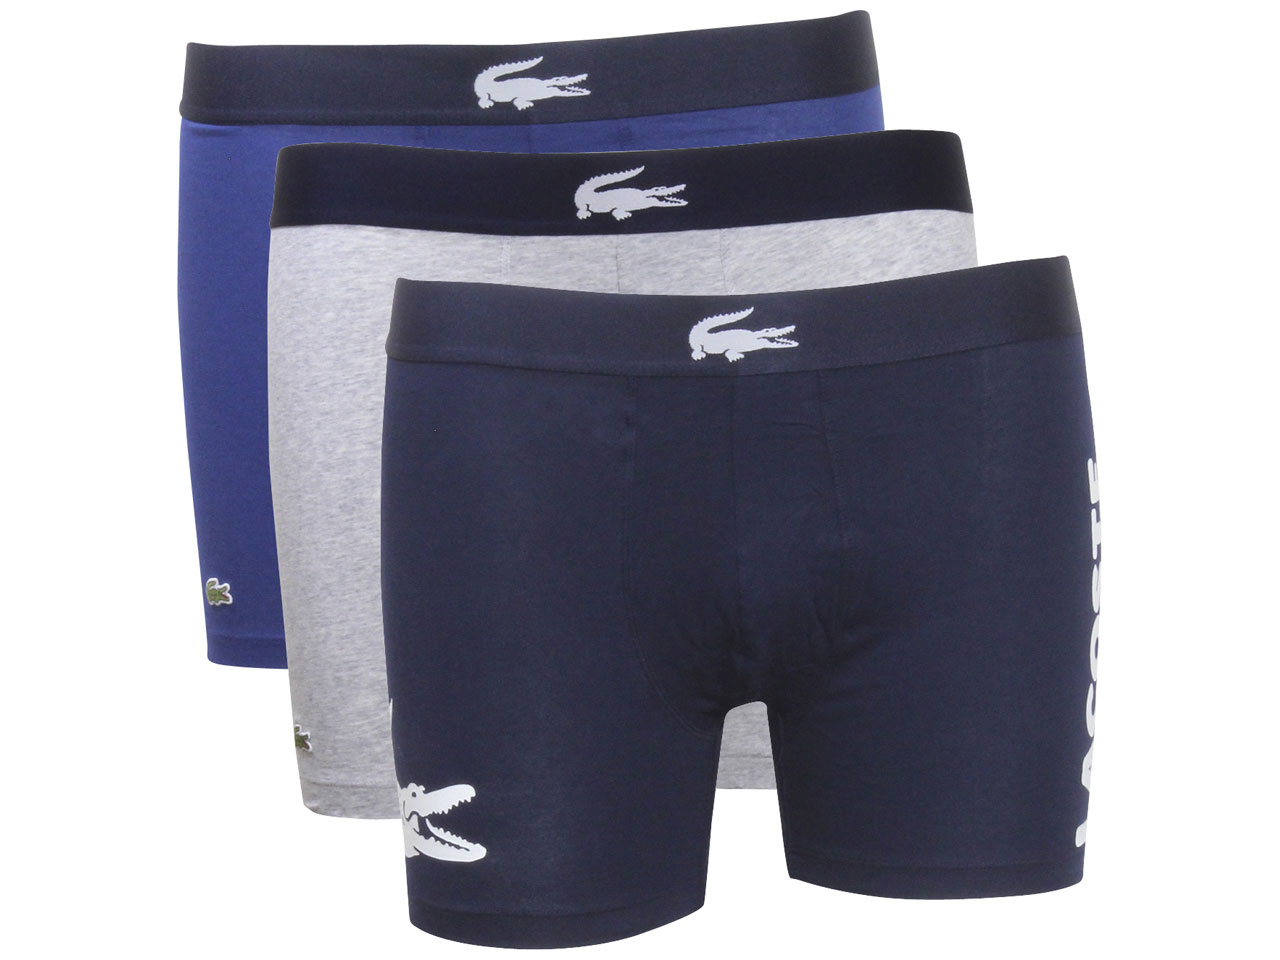 https://www.joylot.com/gallery-option/554277924/1/lacoste-mens-3-pack-boxer-briefs-underwear-stretch-blue-white-silver-bck-1.jpg